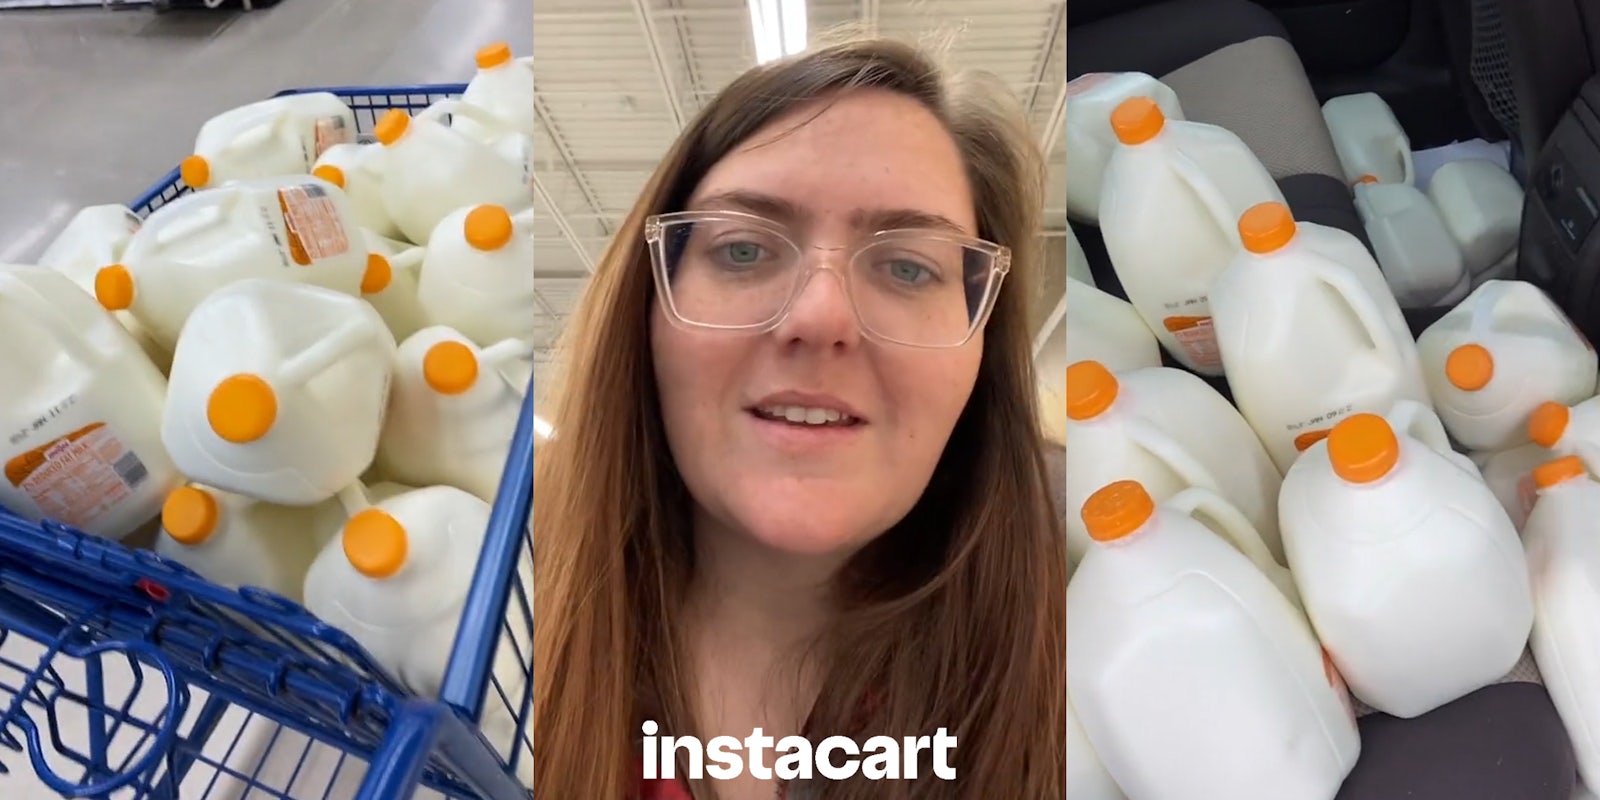 30 gallons of milk in shopping cart (l) Instacart shopper speaking with Instacart logo at bottom (c) 30 gallons of milk in back seats of car (r)